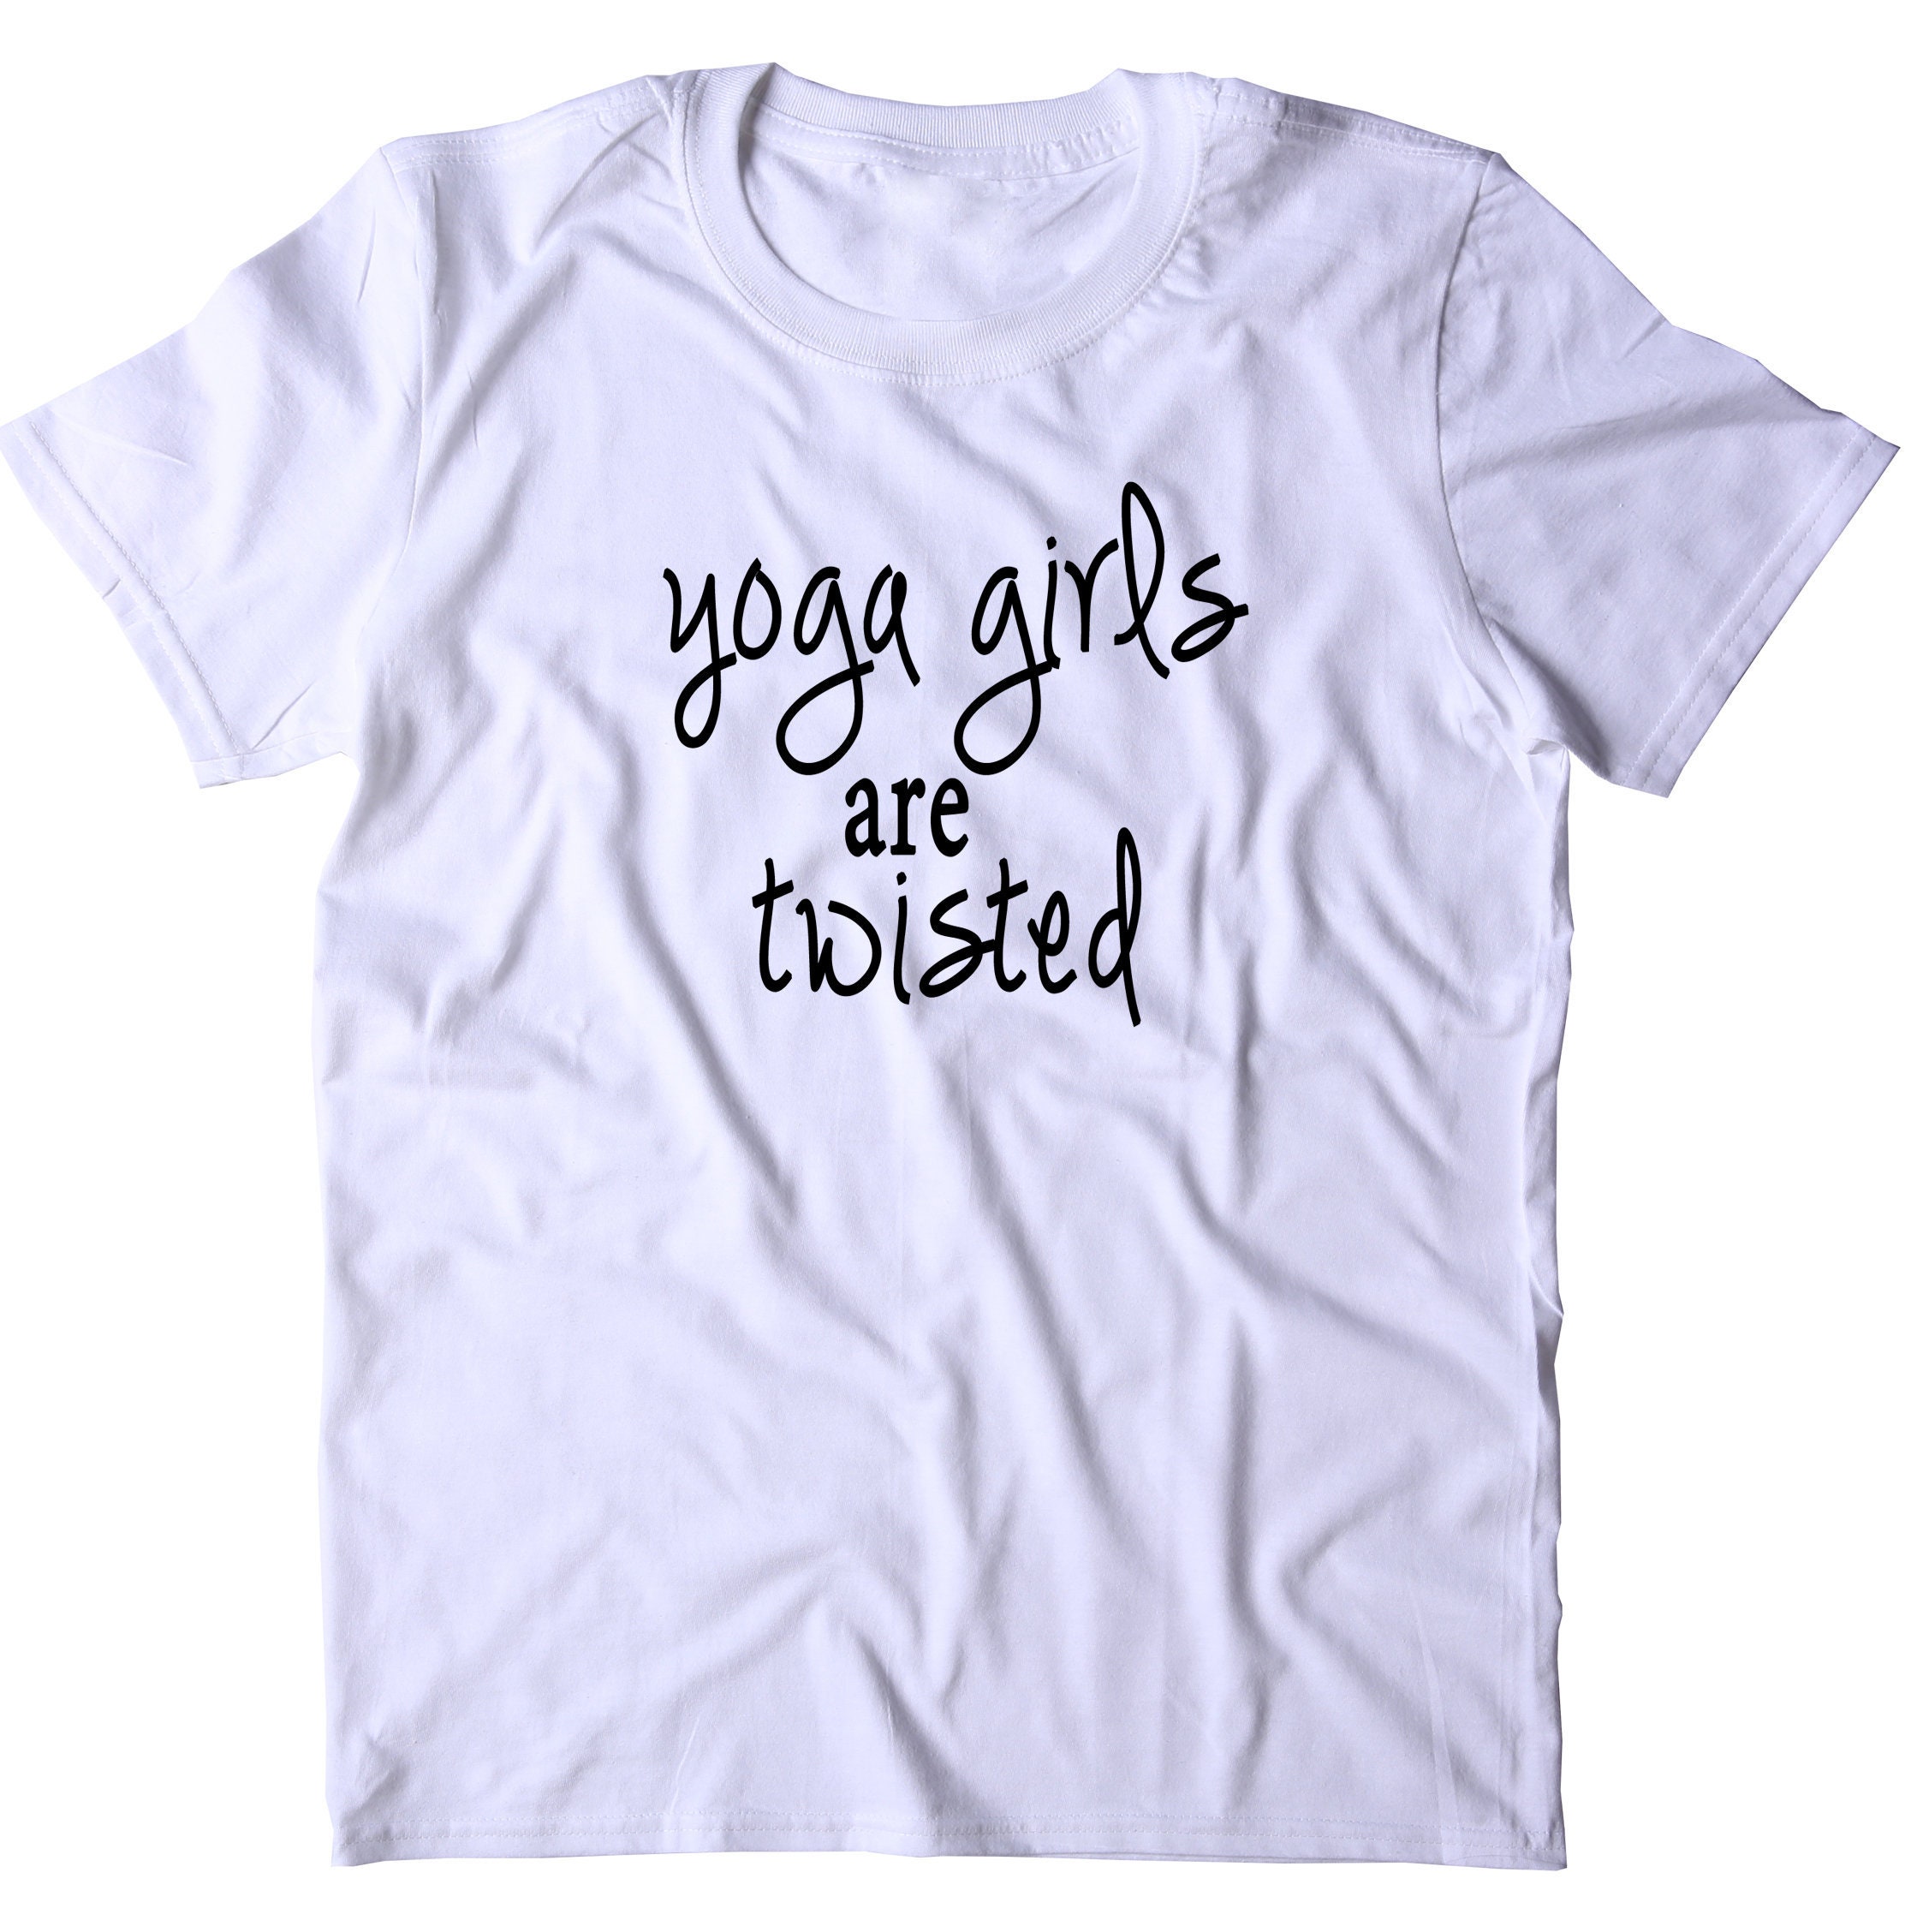 Yoga Tshirt For Women Girls - Twisted – Nutcase